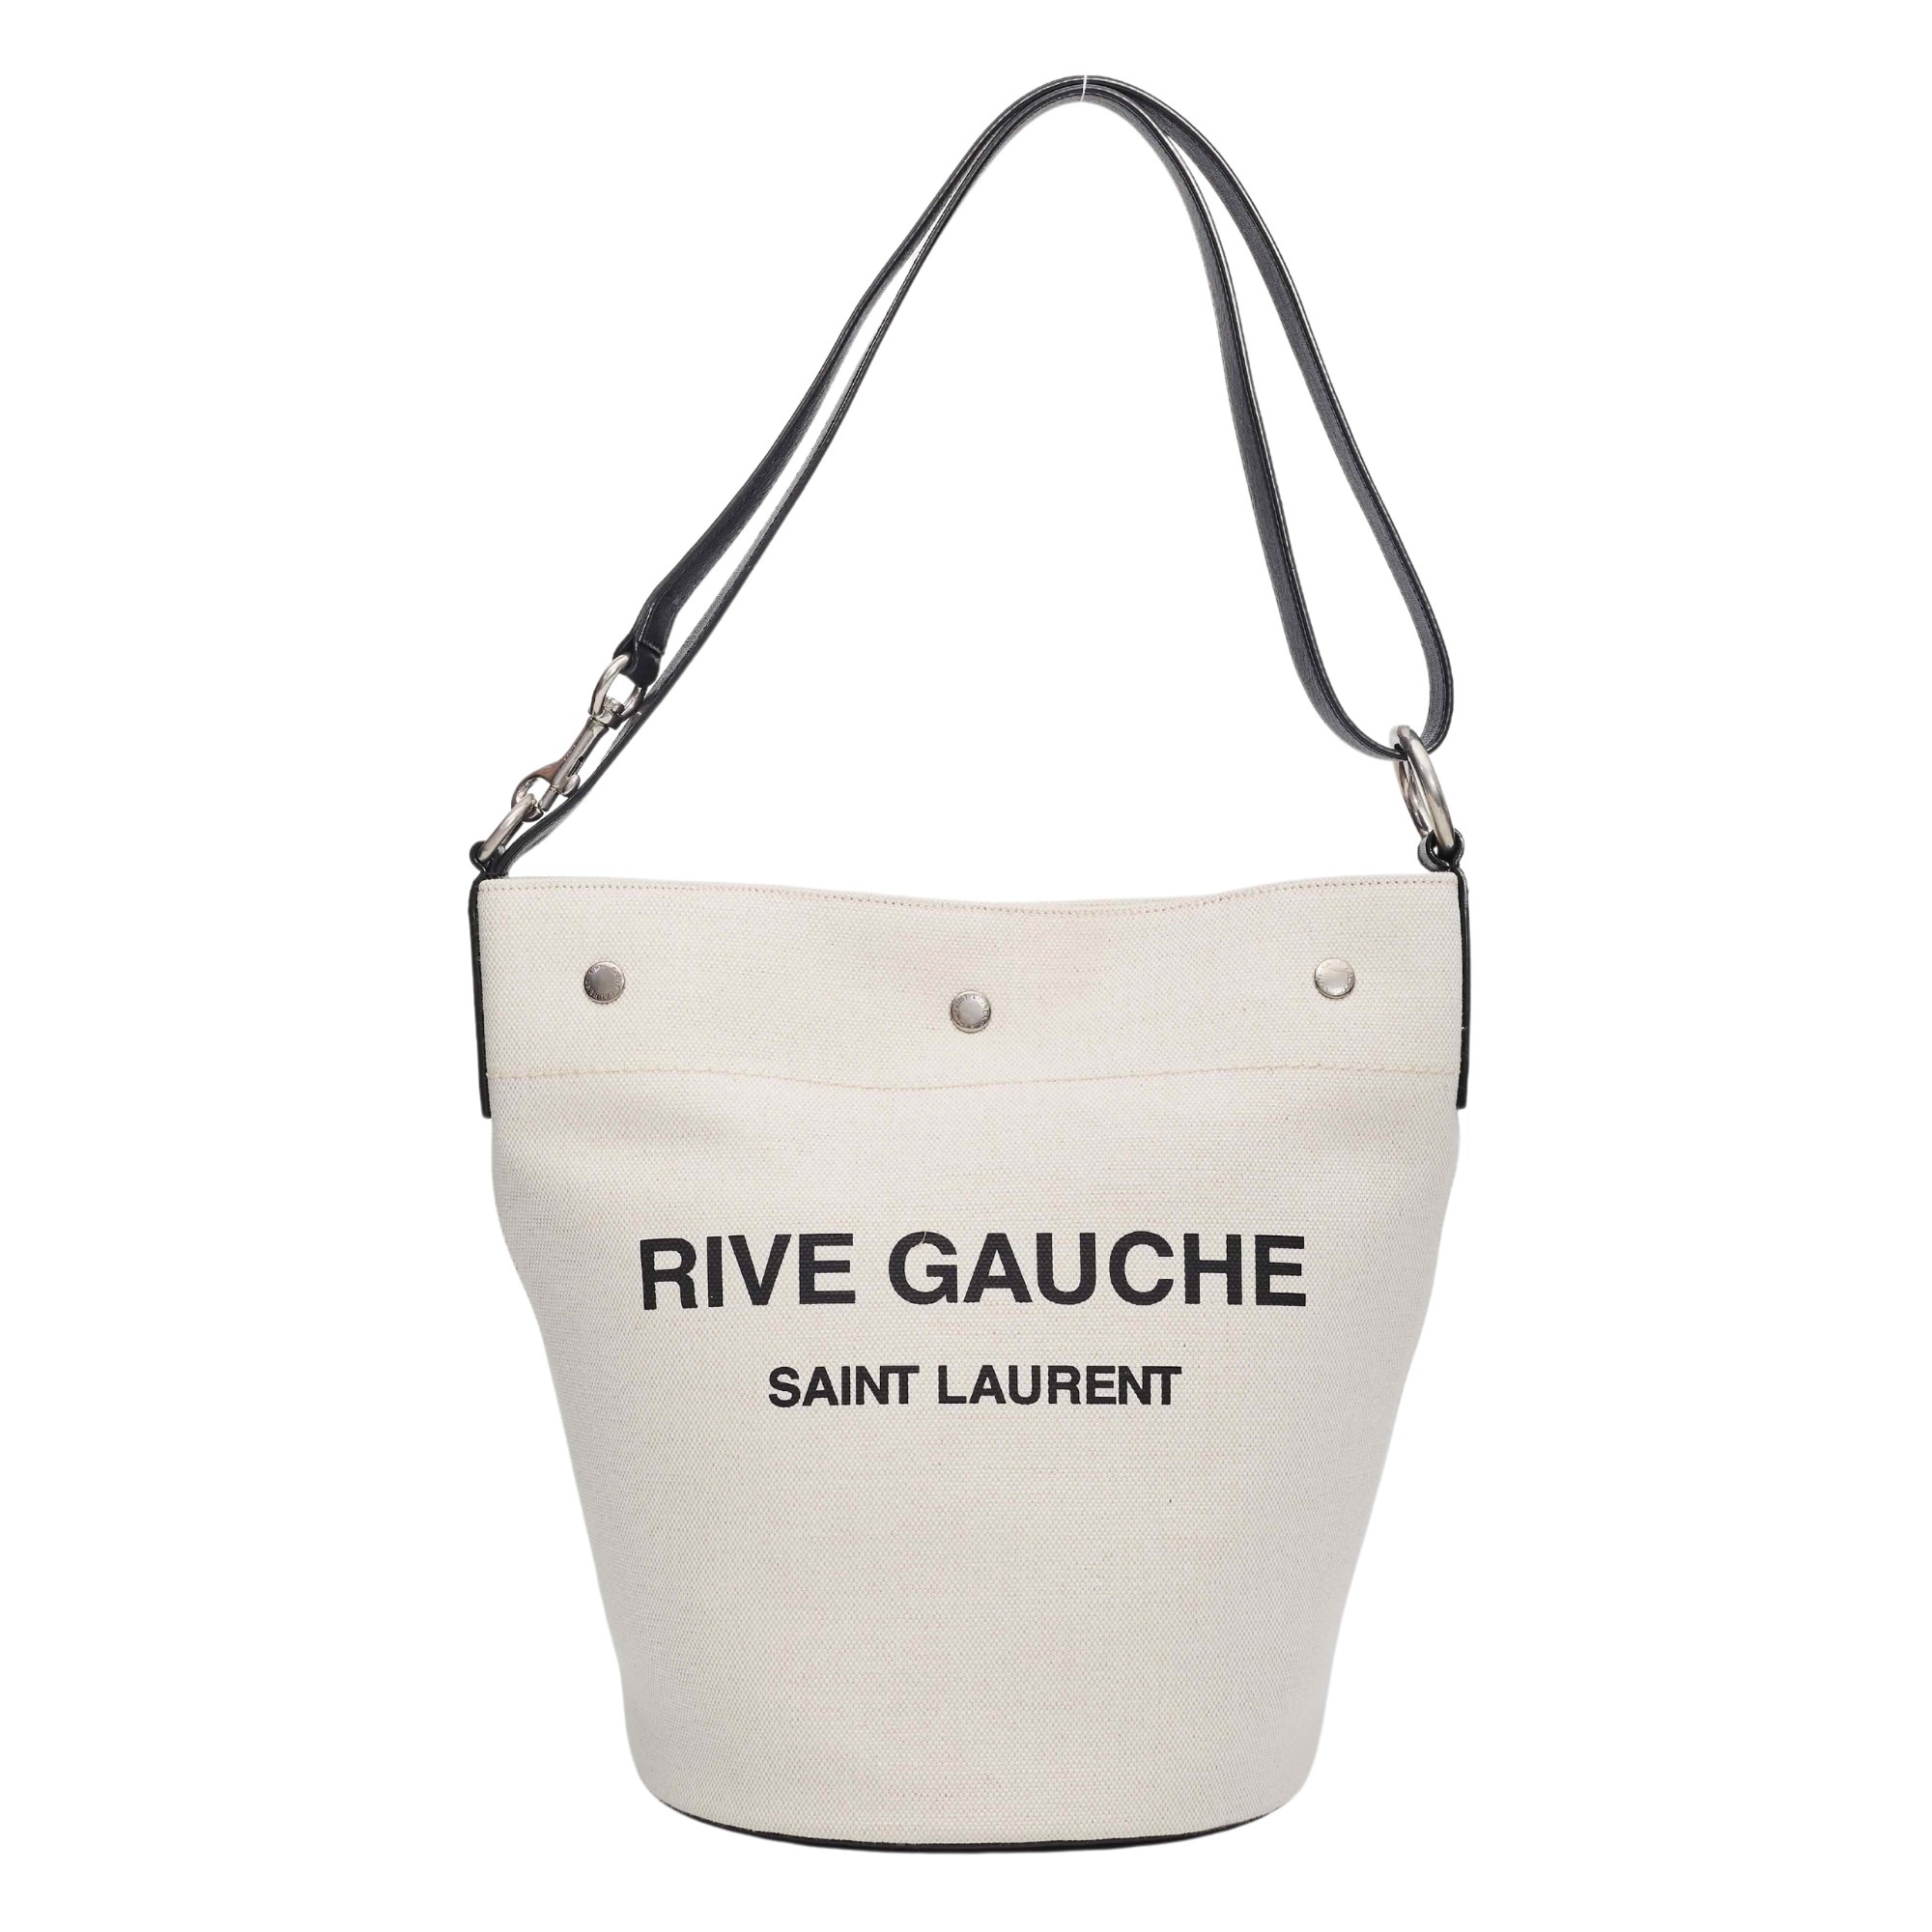 SAINT LAURENT RIVE GAUCHE TUSCANY WHITE LINEN BUCKET BAG